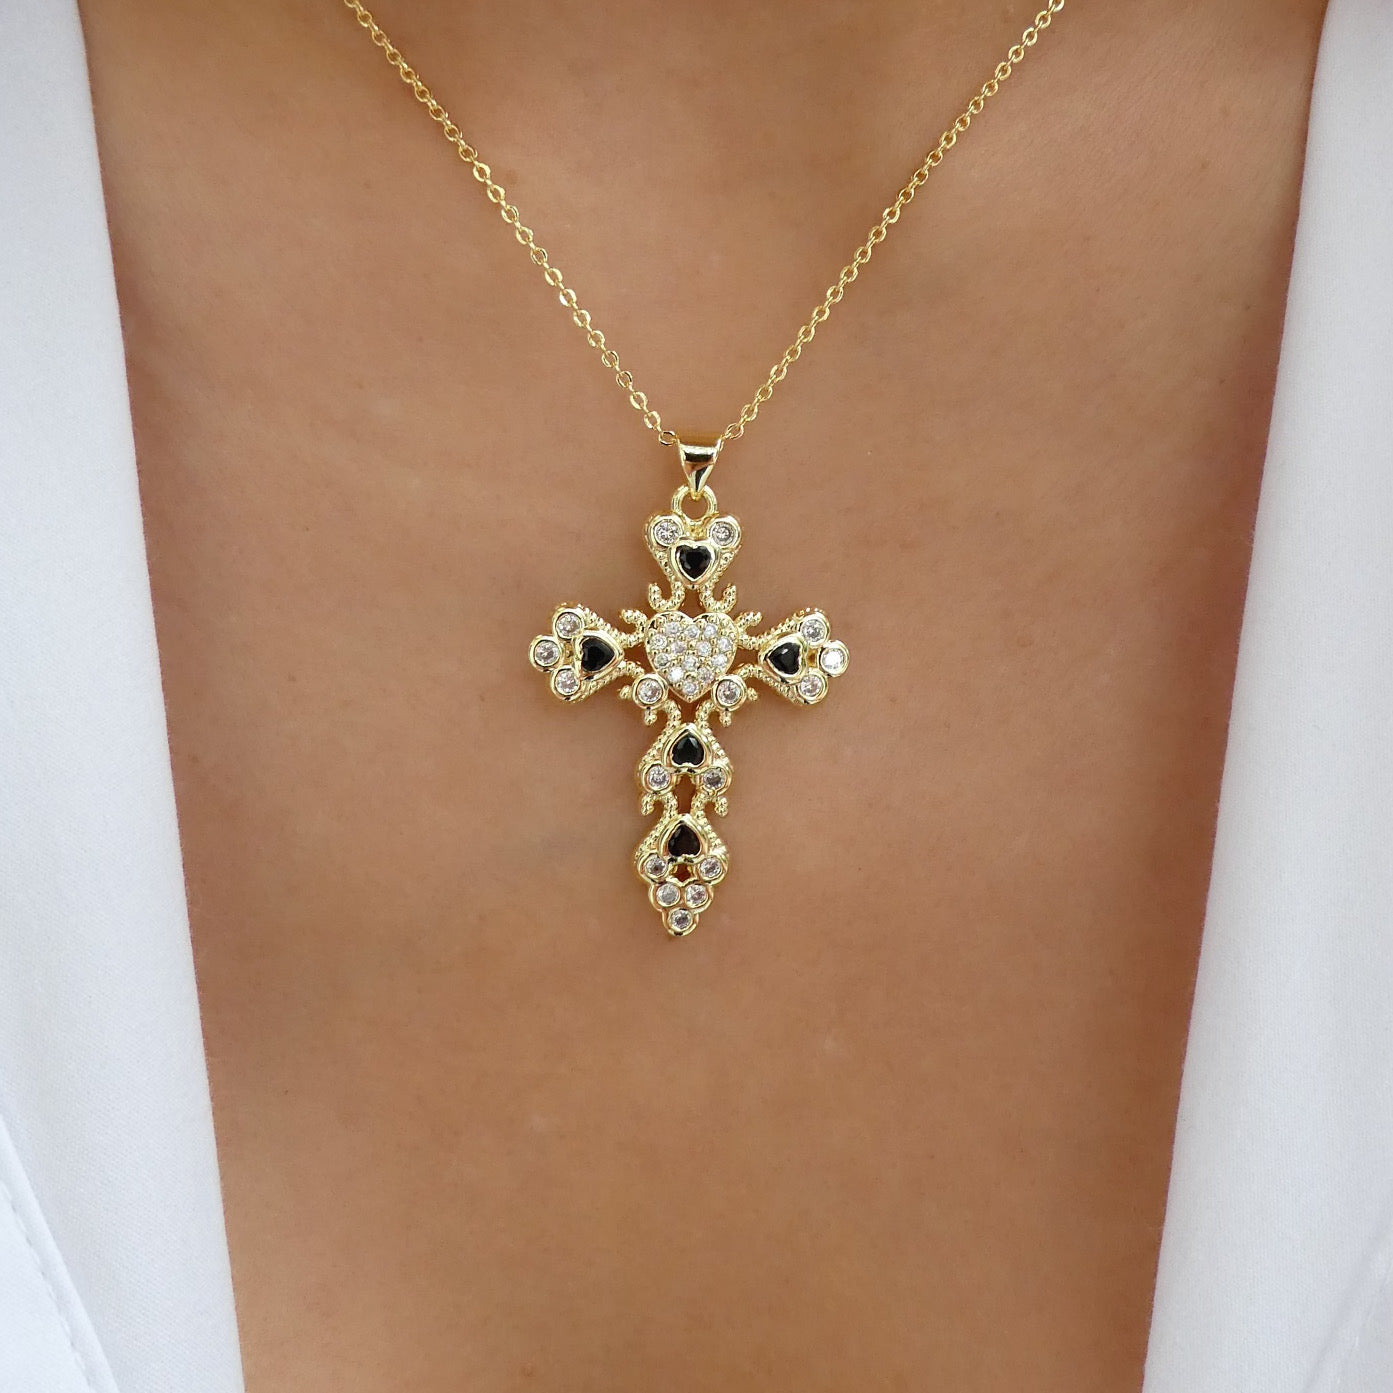 Mustard Seed & Heart Cross Necklace - Sterling Silver Pendant on 18